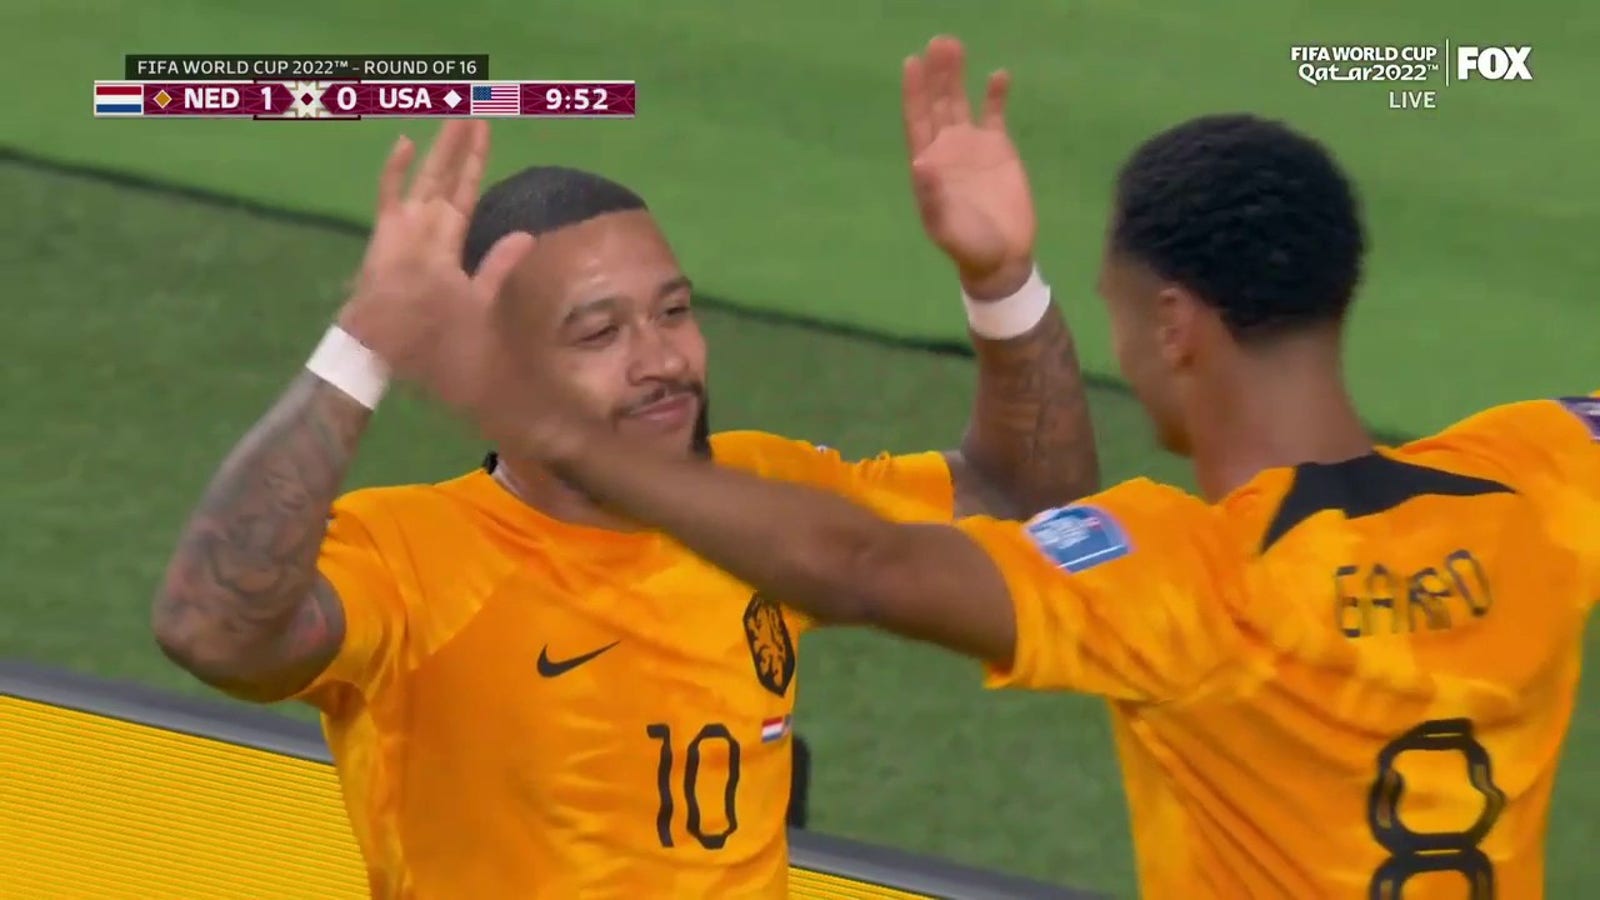 Netherlands' Memphis Depay scores goal vs. USA in 10'